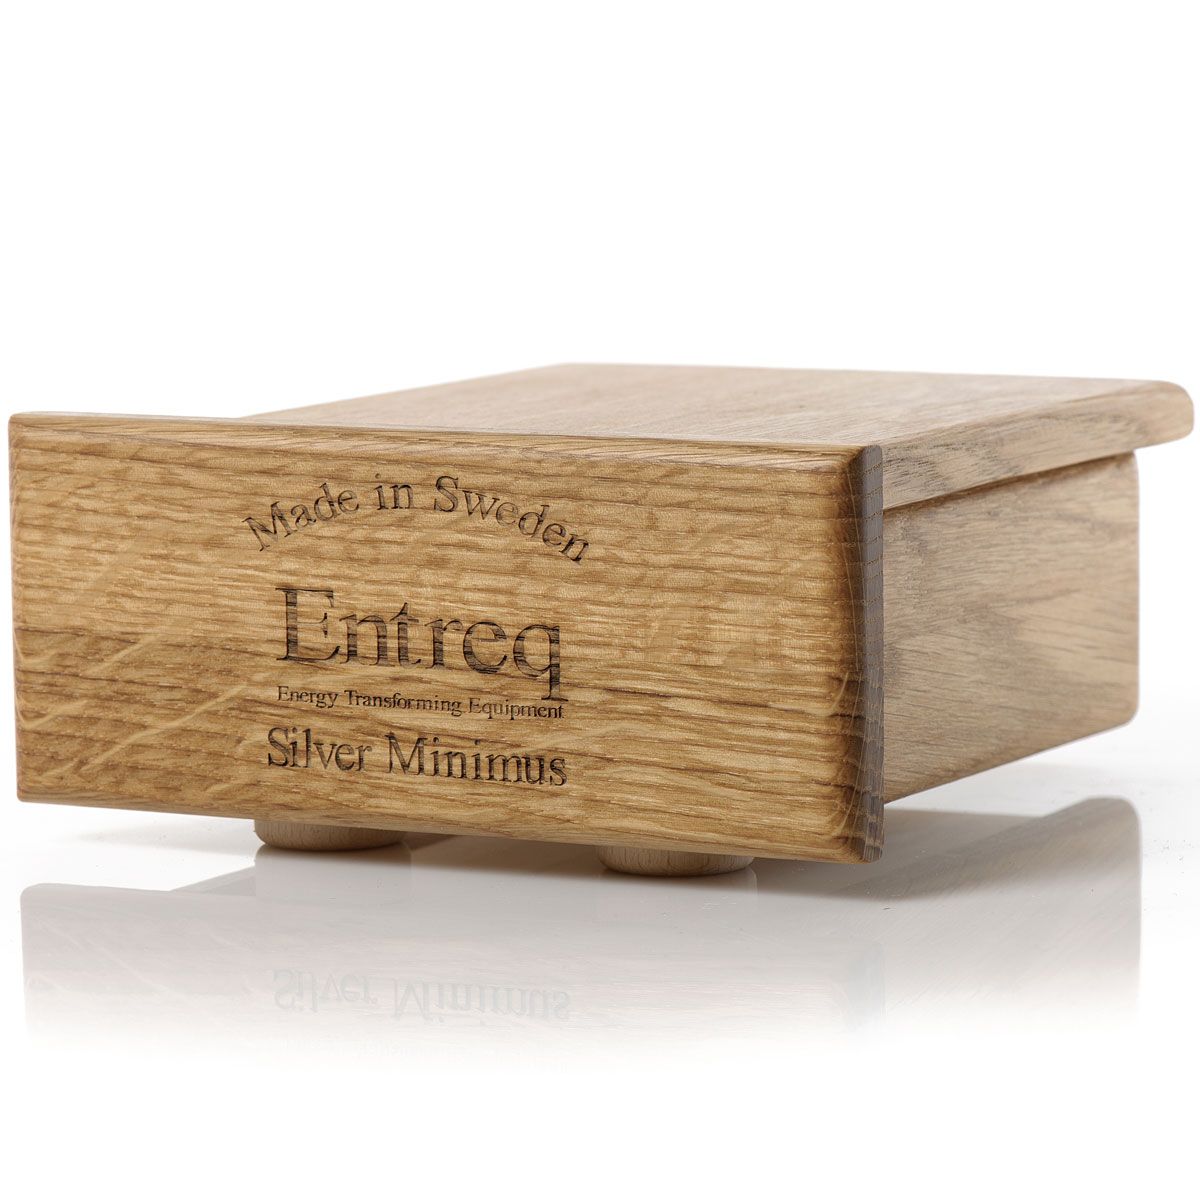 Entreq Silver Minimus Infinity Ground Box